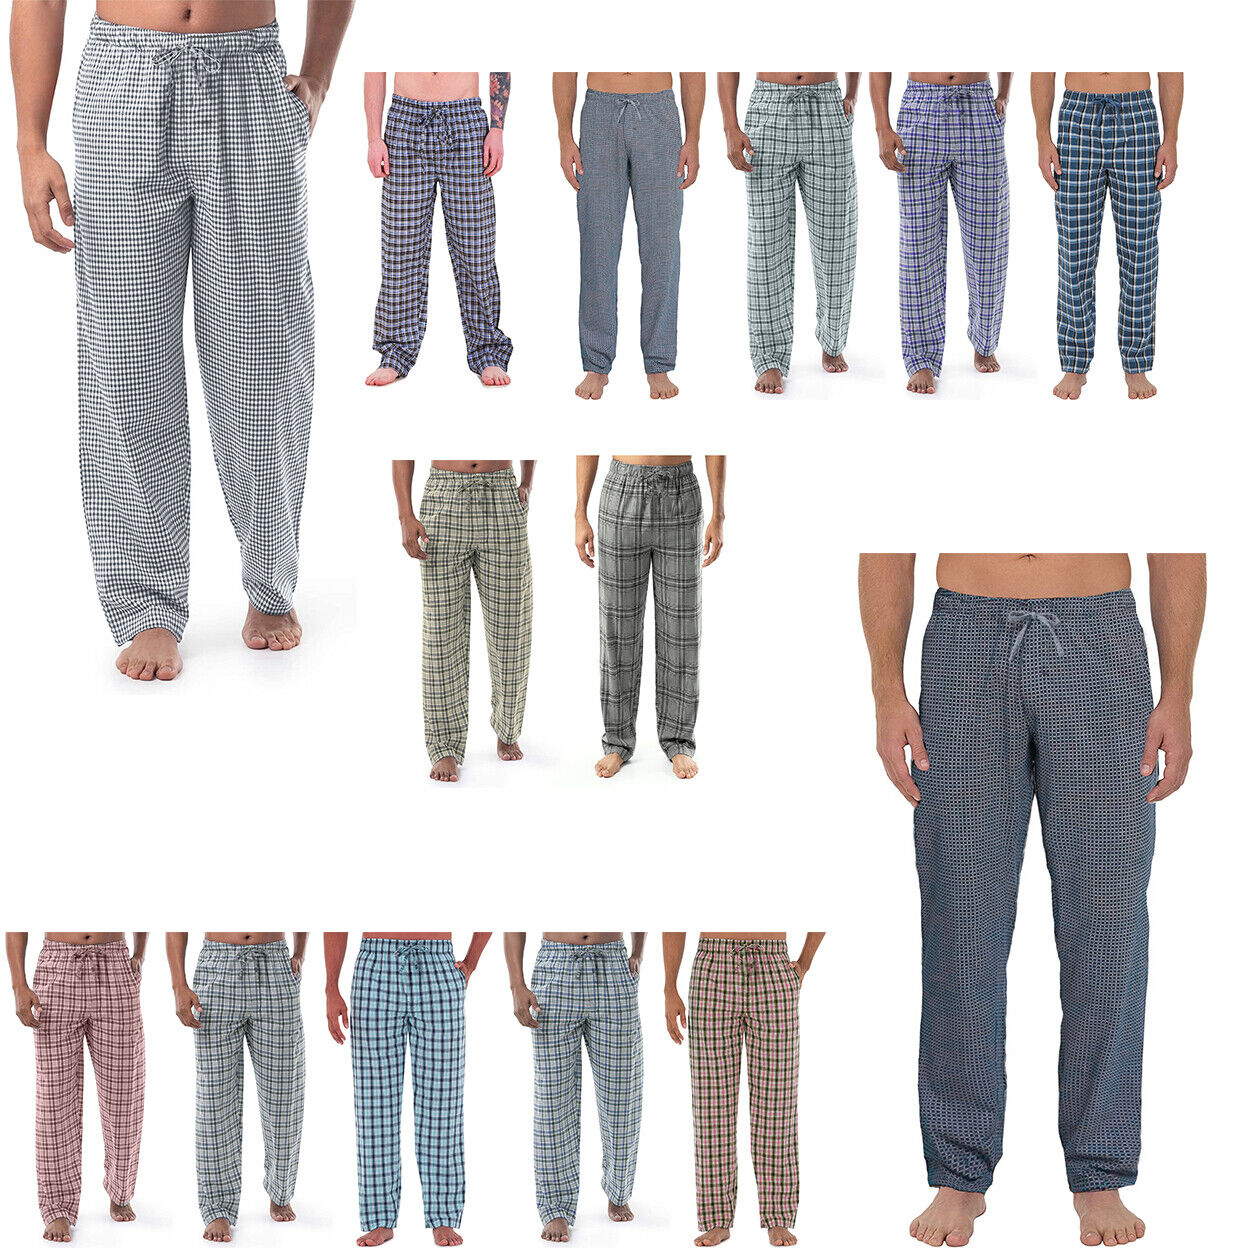 3-Pack: Men's Ultra-Soft Solid & Plaid Cotton Jersey Knit Comfy Sleep Lounge Pajama Pants - Plaid, Xx-large